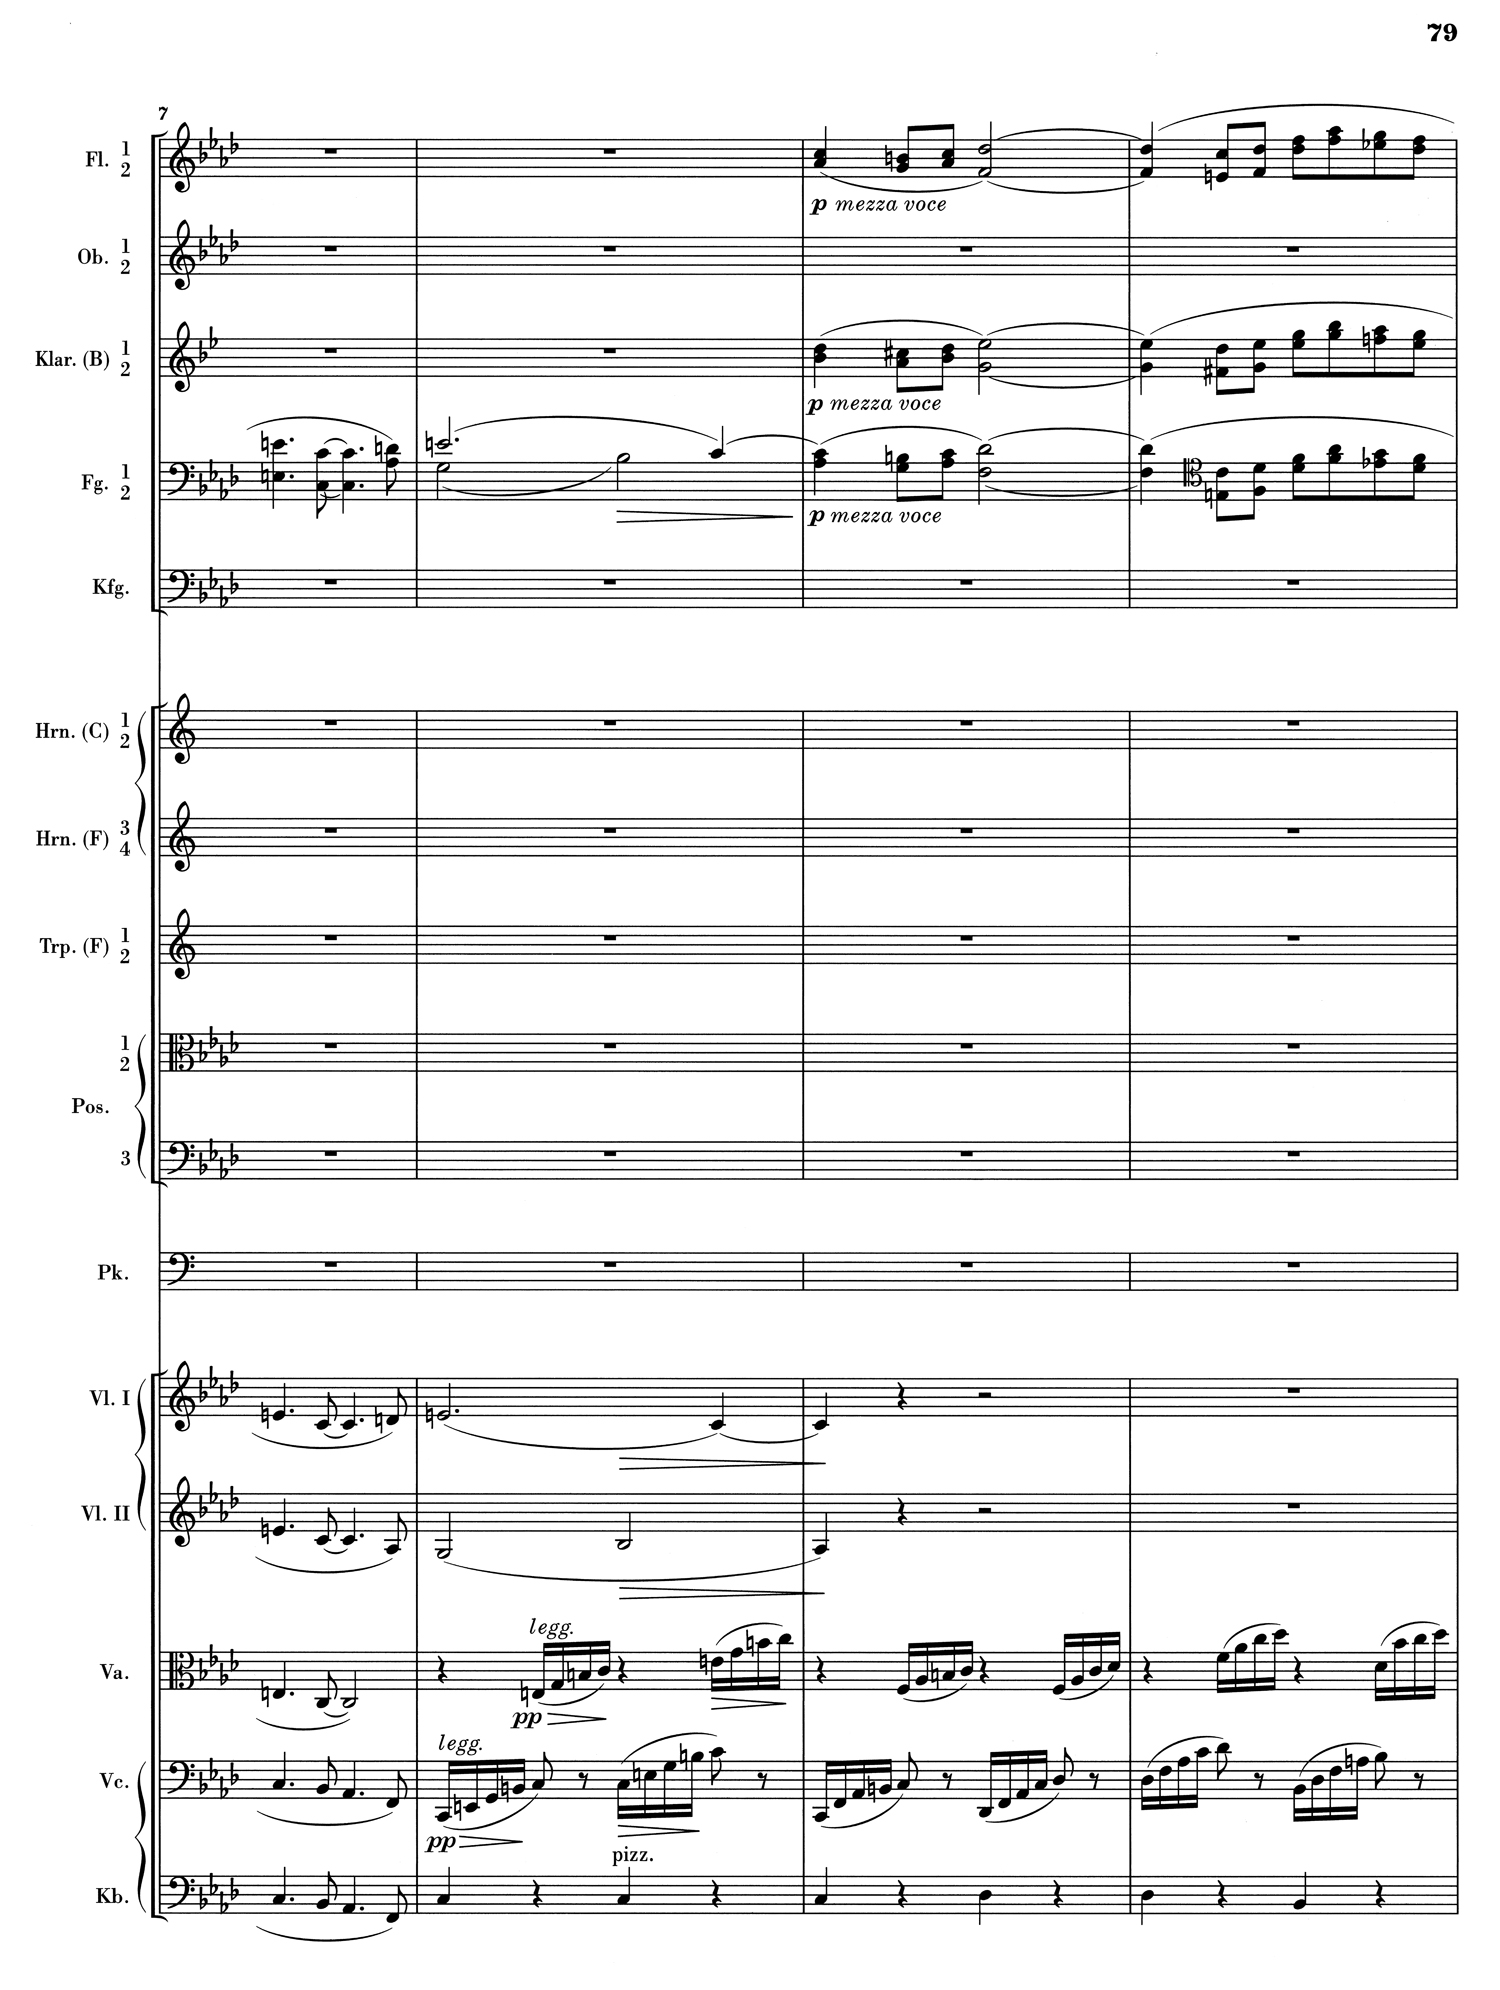 Brahms 3 Score 8.jpg